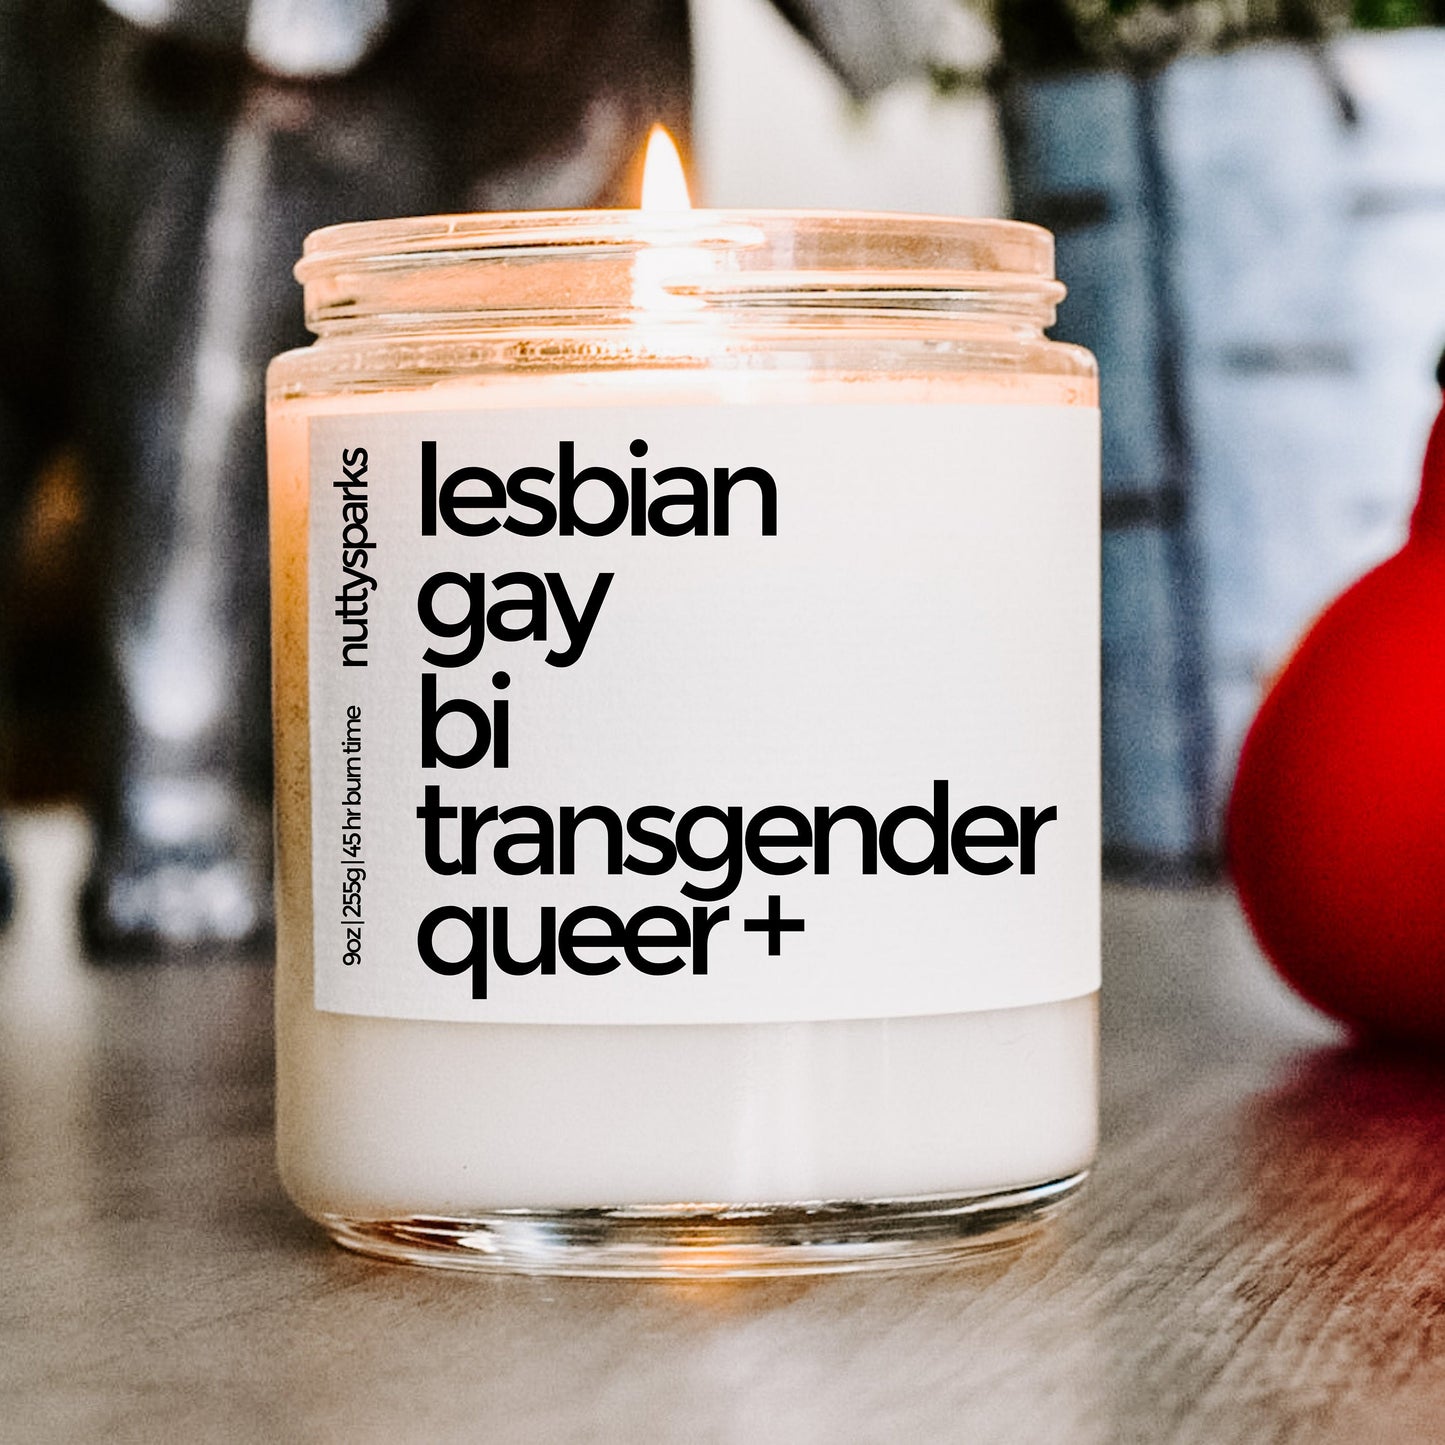 lesbian gay bi transgender queer +